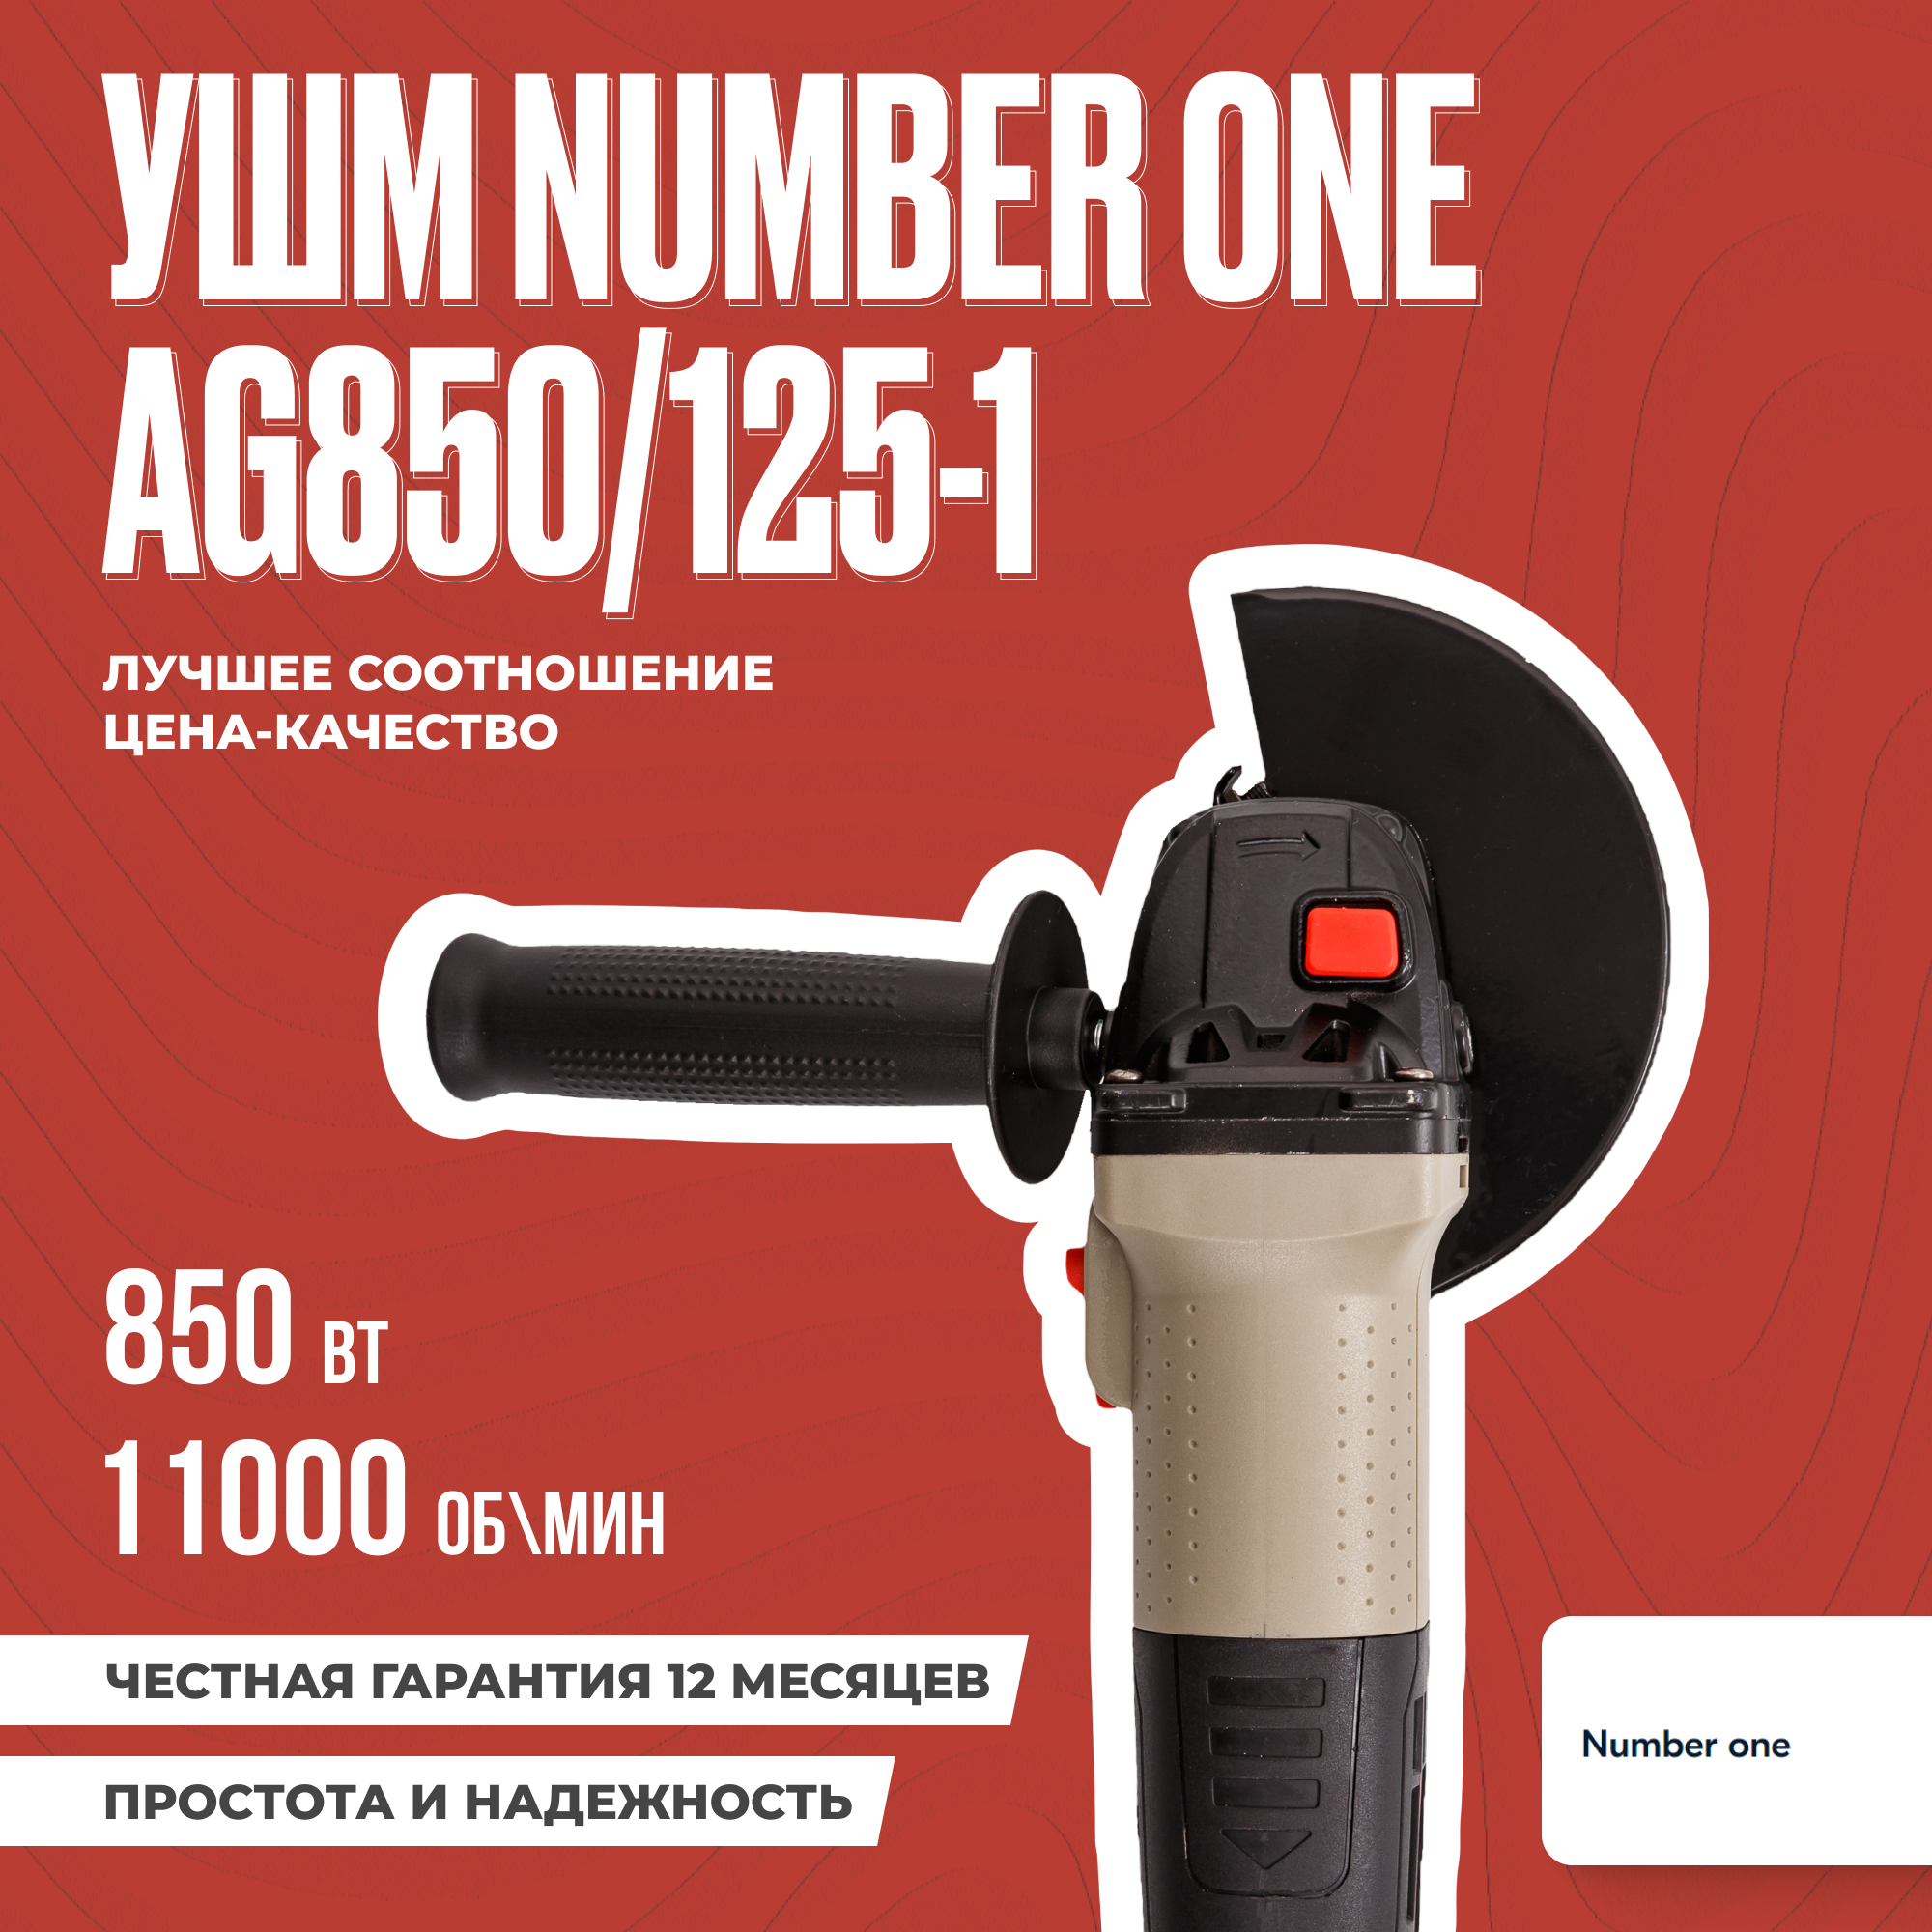 Шлифовальная машина (УШМ, Болгарка) NUMBER ONE AG850/125-1 125мм, 850Вт, длин. рукоят.